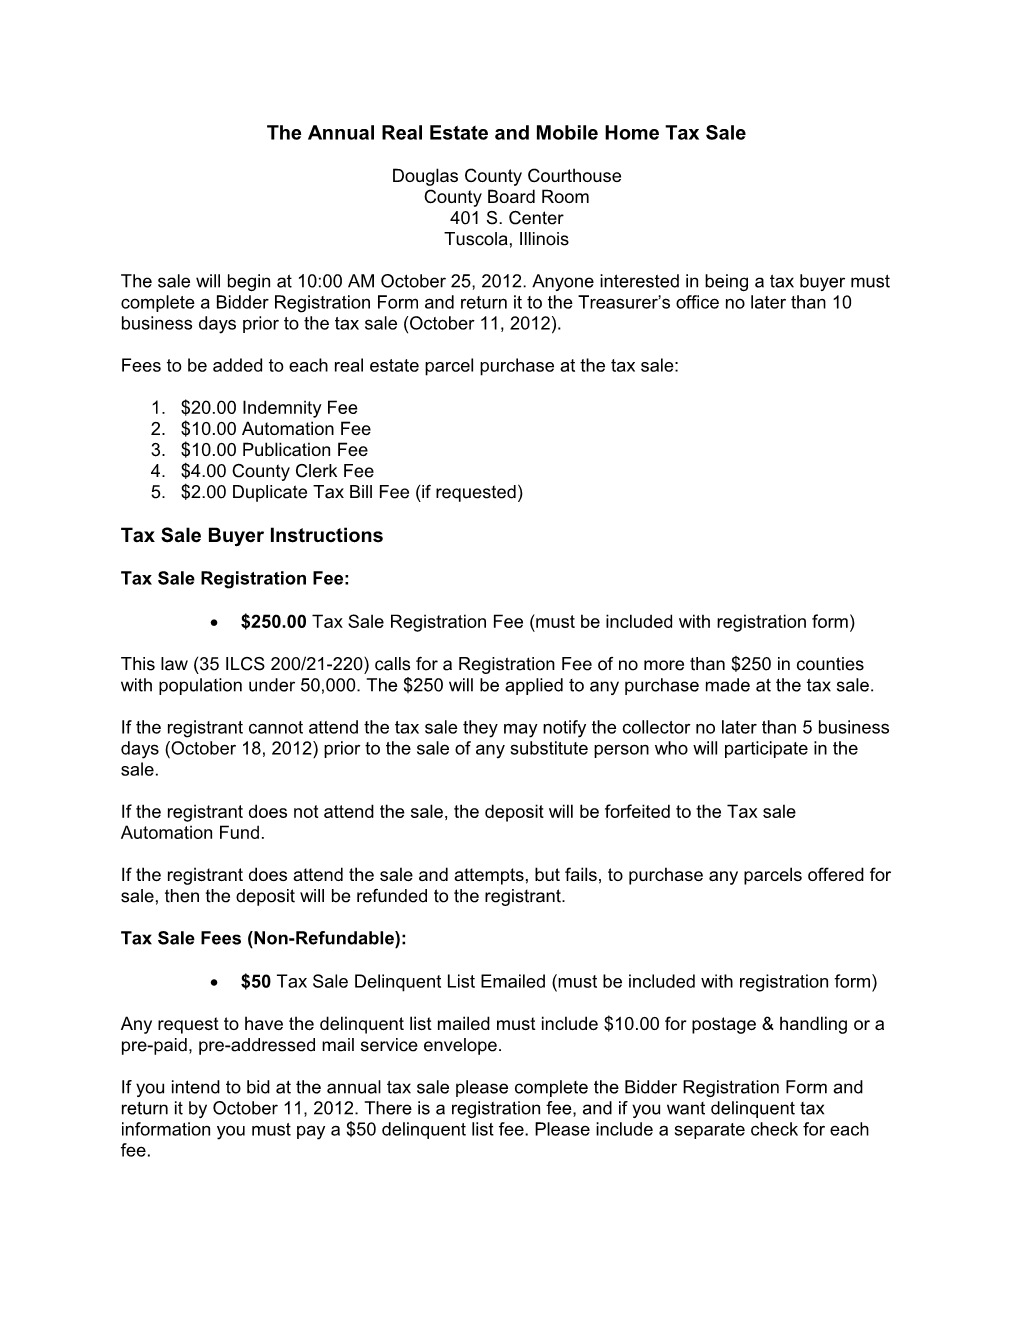 Douglas County Real Estate Tax Sale Registration Form